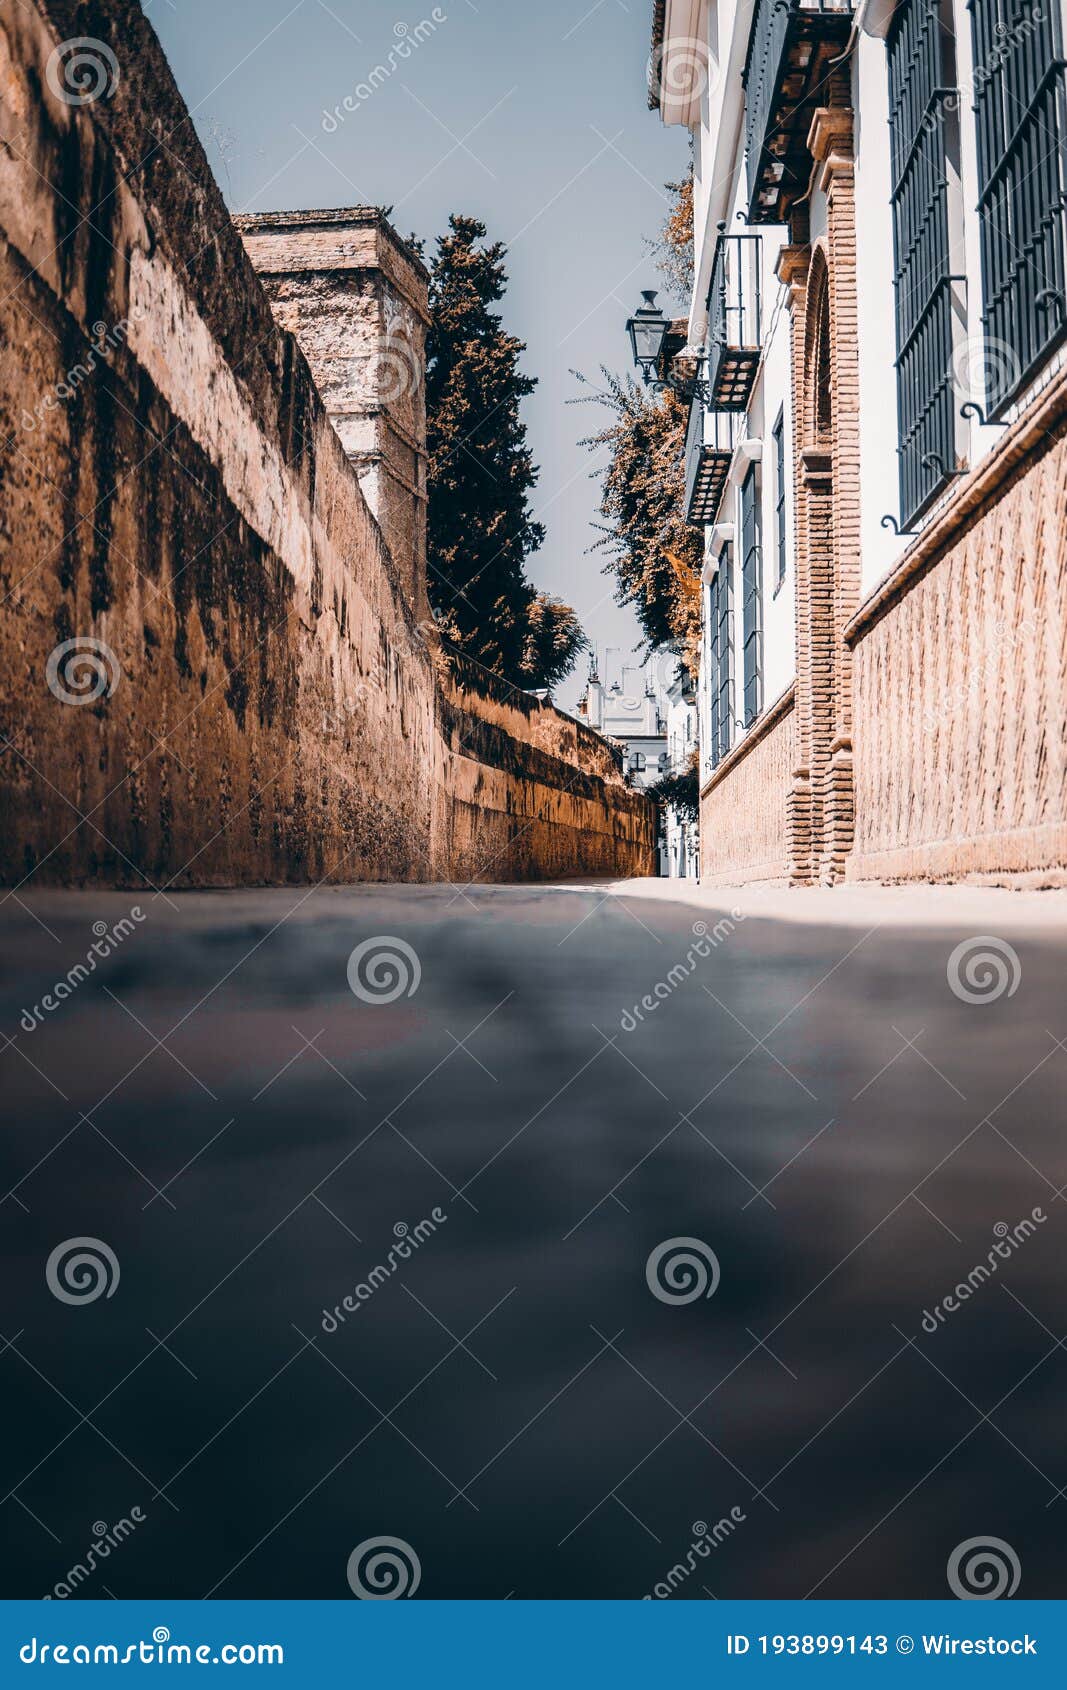 vertical shot of calle agua street in seville